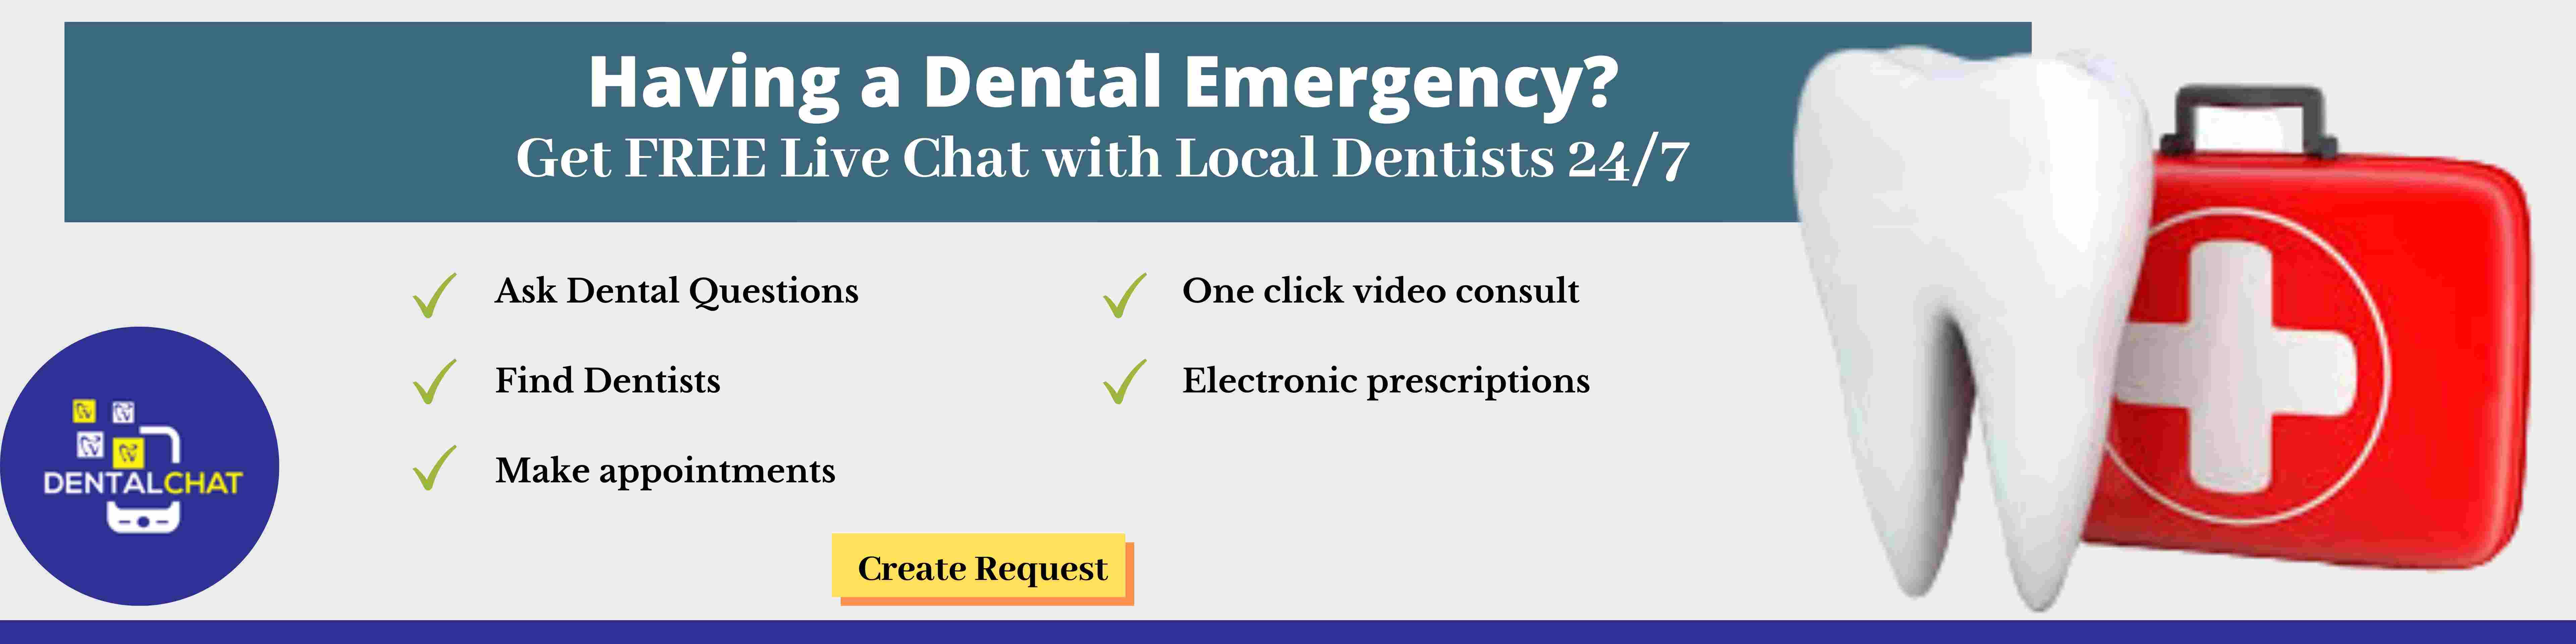 Local dentist emergency info, local emergency dentists directory listing online, local dental emergencies help blog